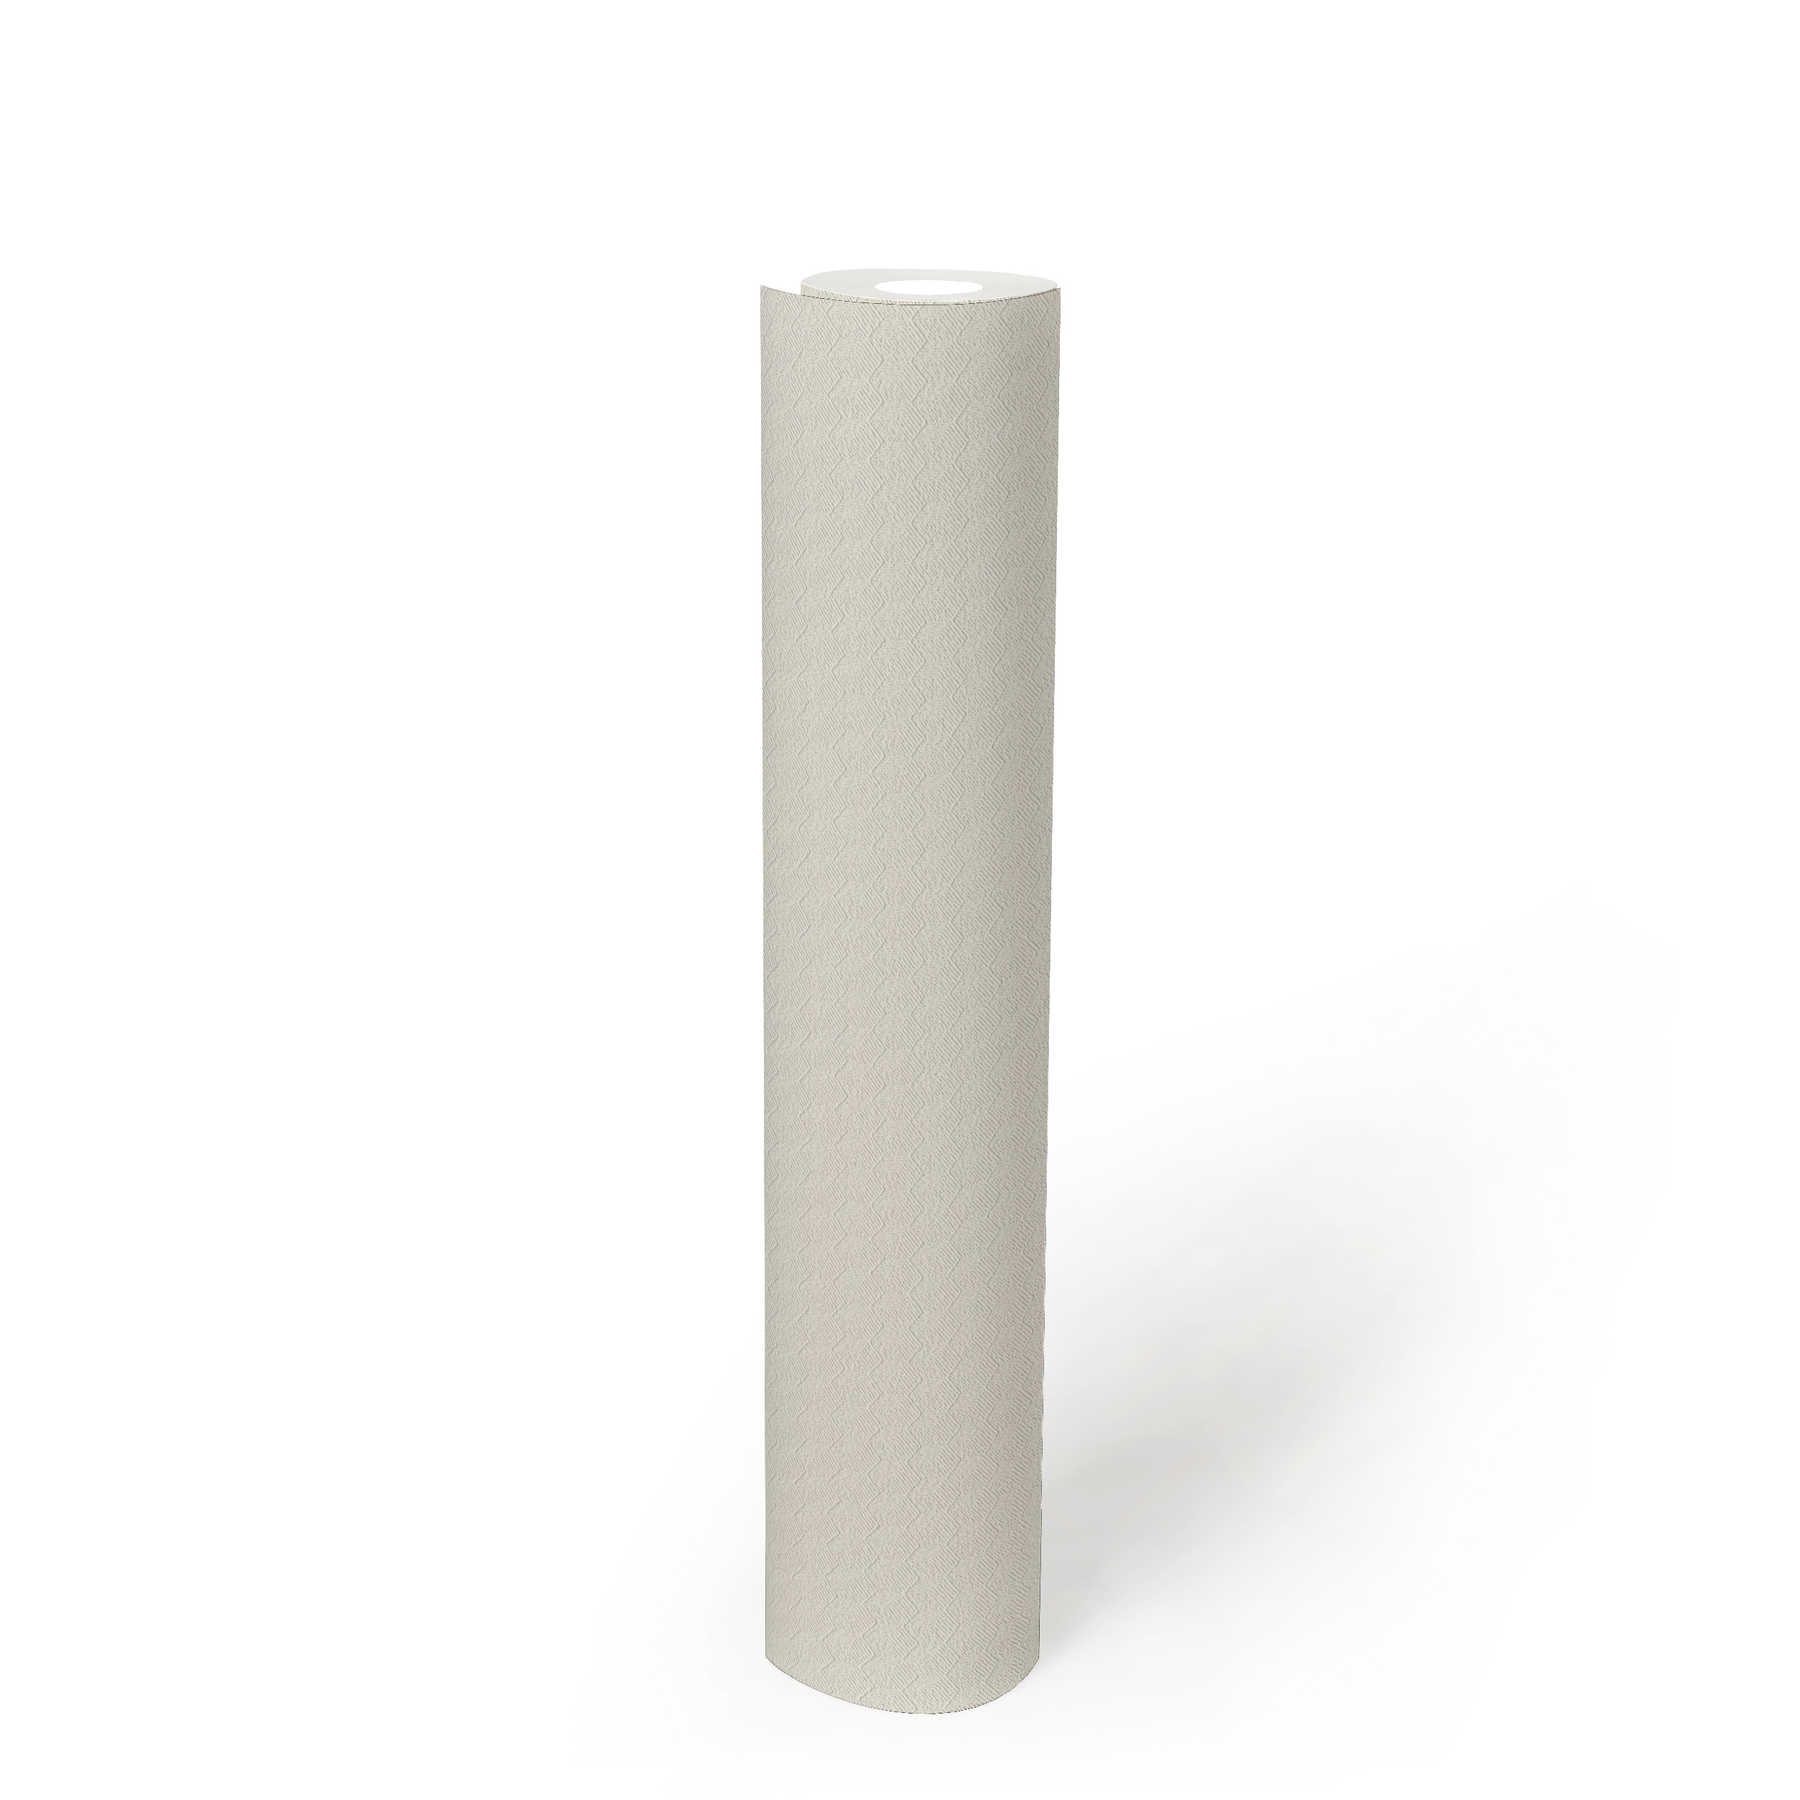             Wallpaper plain, textured with zigzag design - white
        